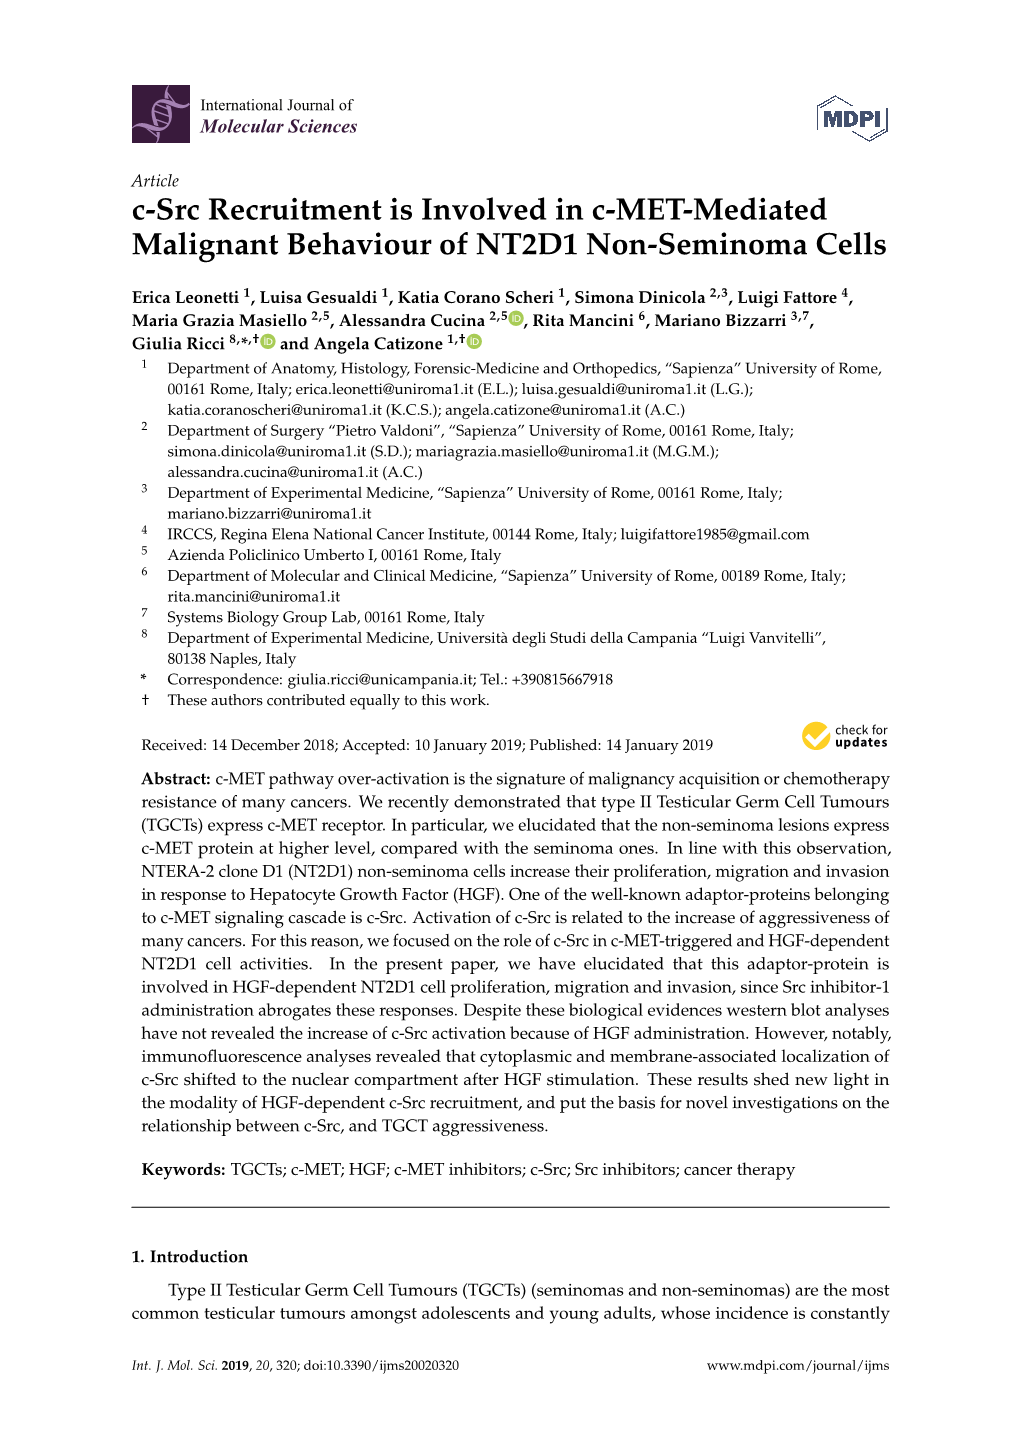 C-Src Recruitment Is Involved in C-MET-Mediated Malignant Behaviour of NT2D1 Non-Seminoma Cells